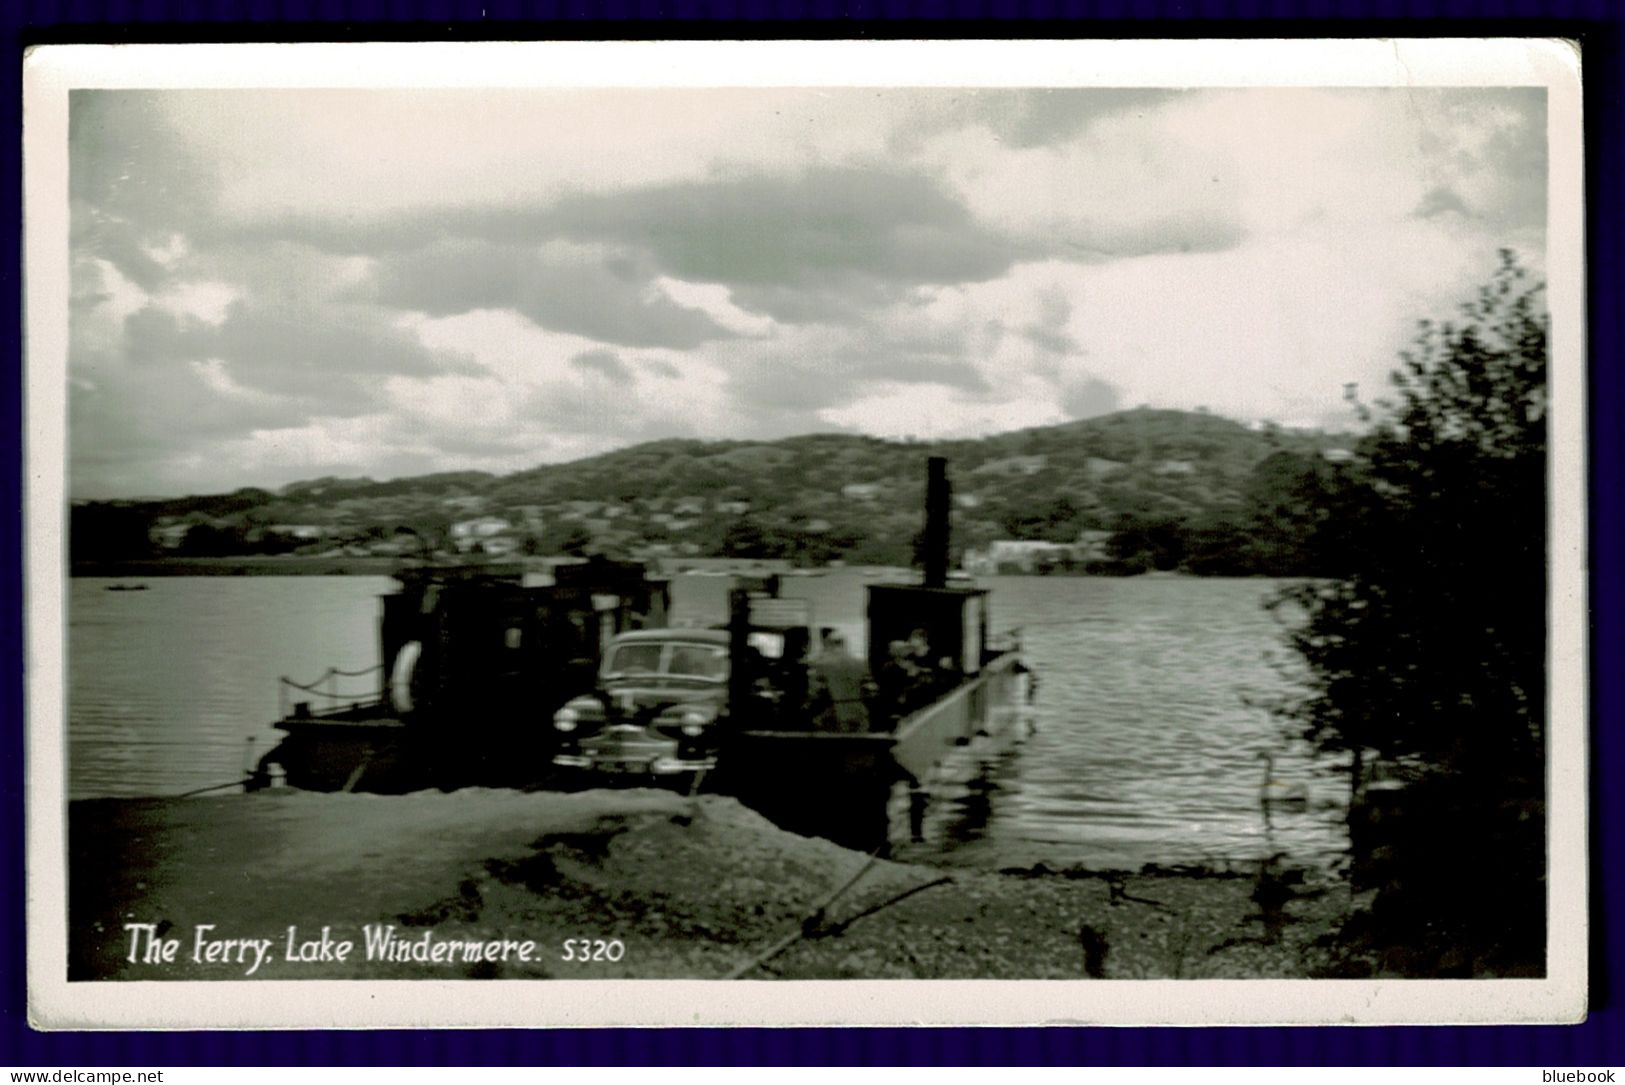 Ref 1633 - Unused Real Photo Postcard - The Car Ferry Lake Windermere - Lake District - Windermere